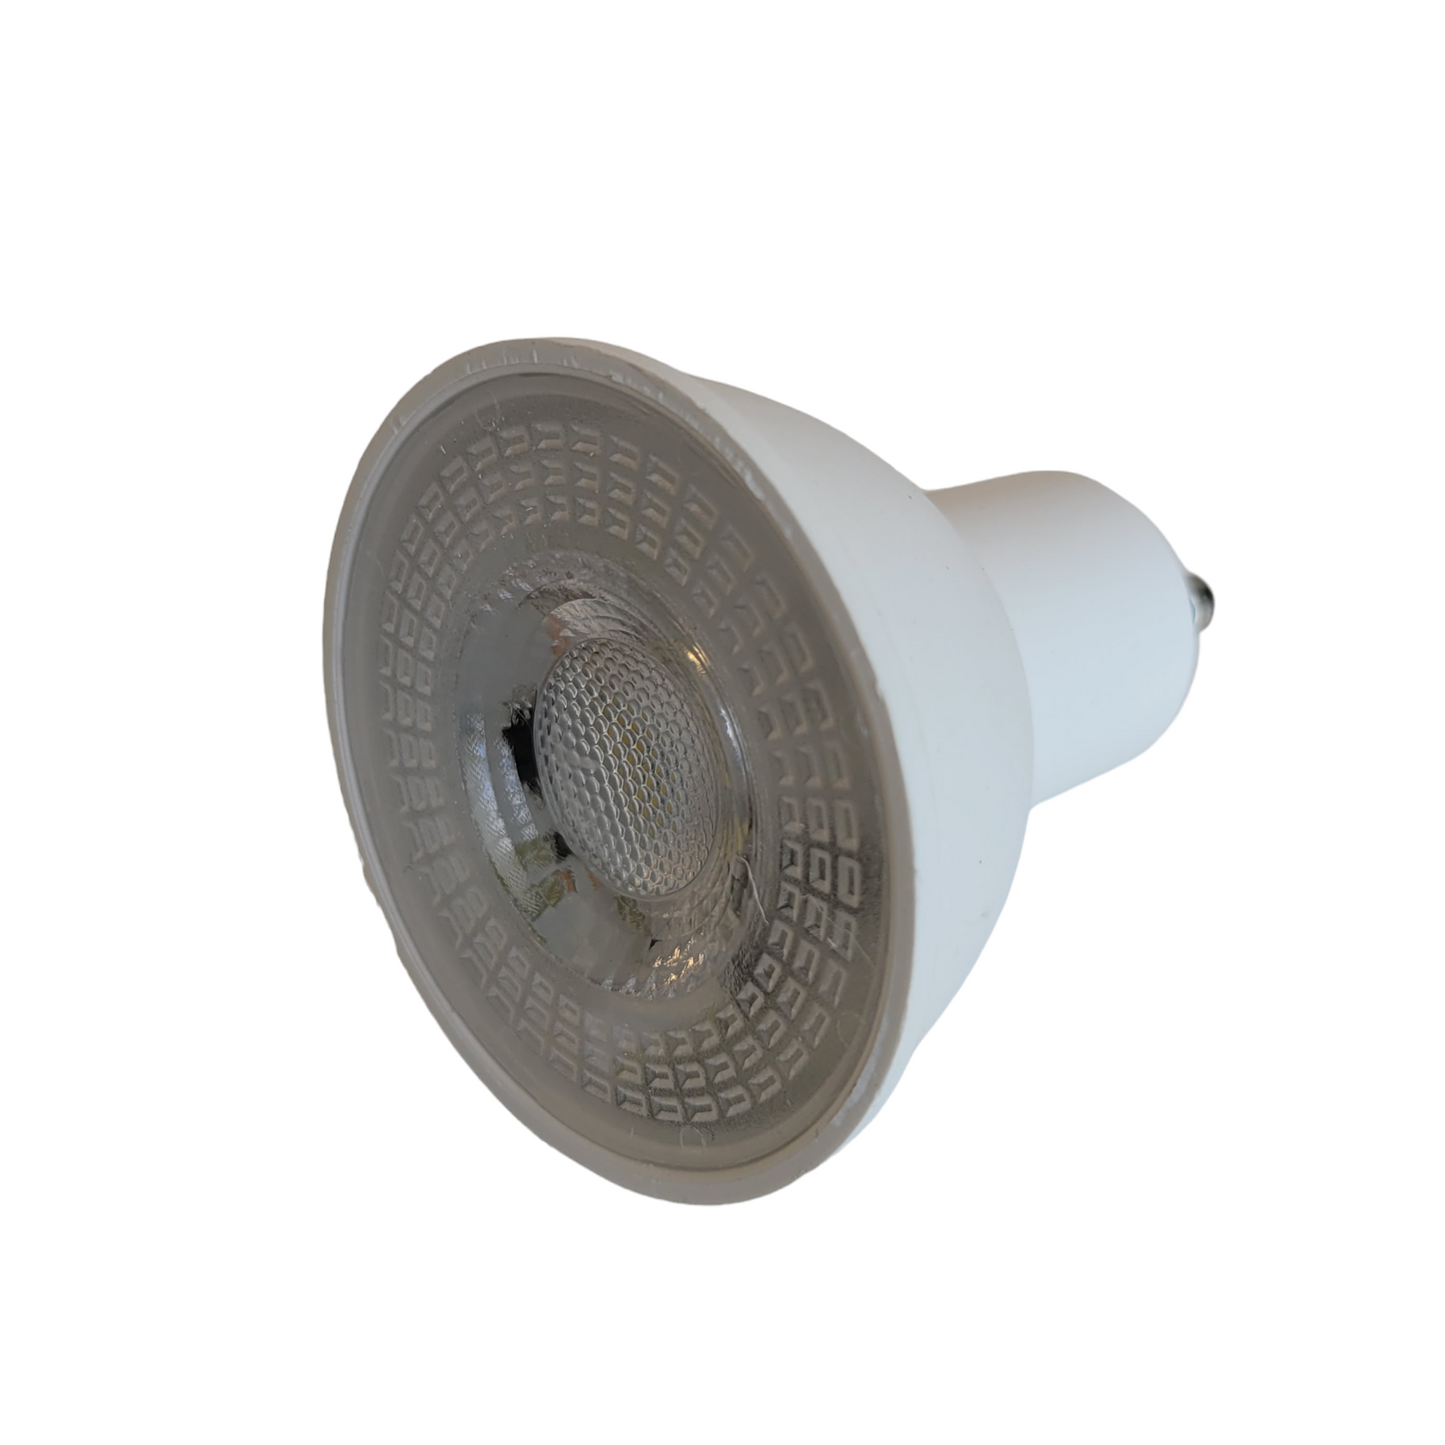 Pack of 5 - ProVision GU10 LED Spotlight Bulbs 5W - Bright / Warm White